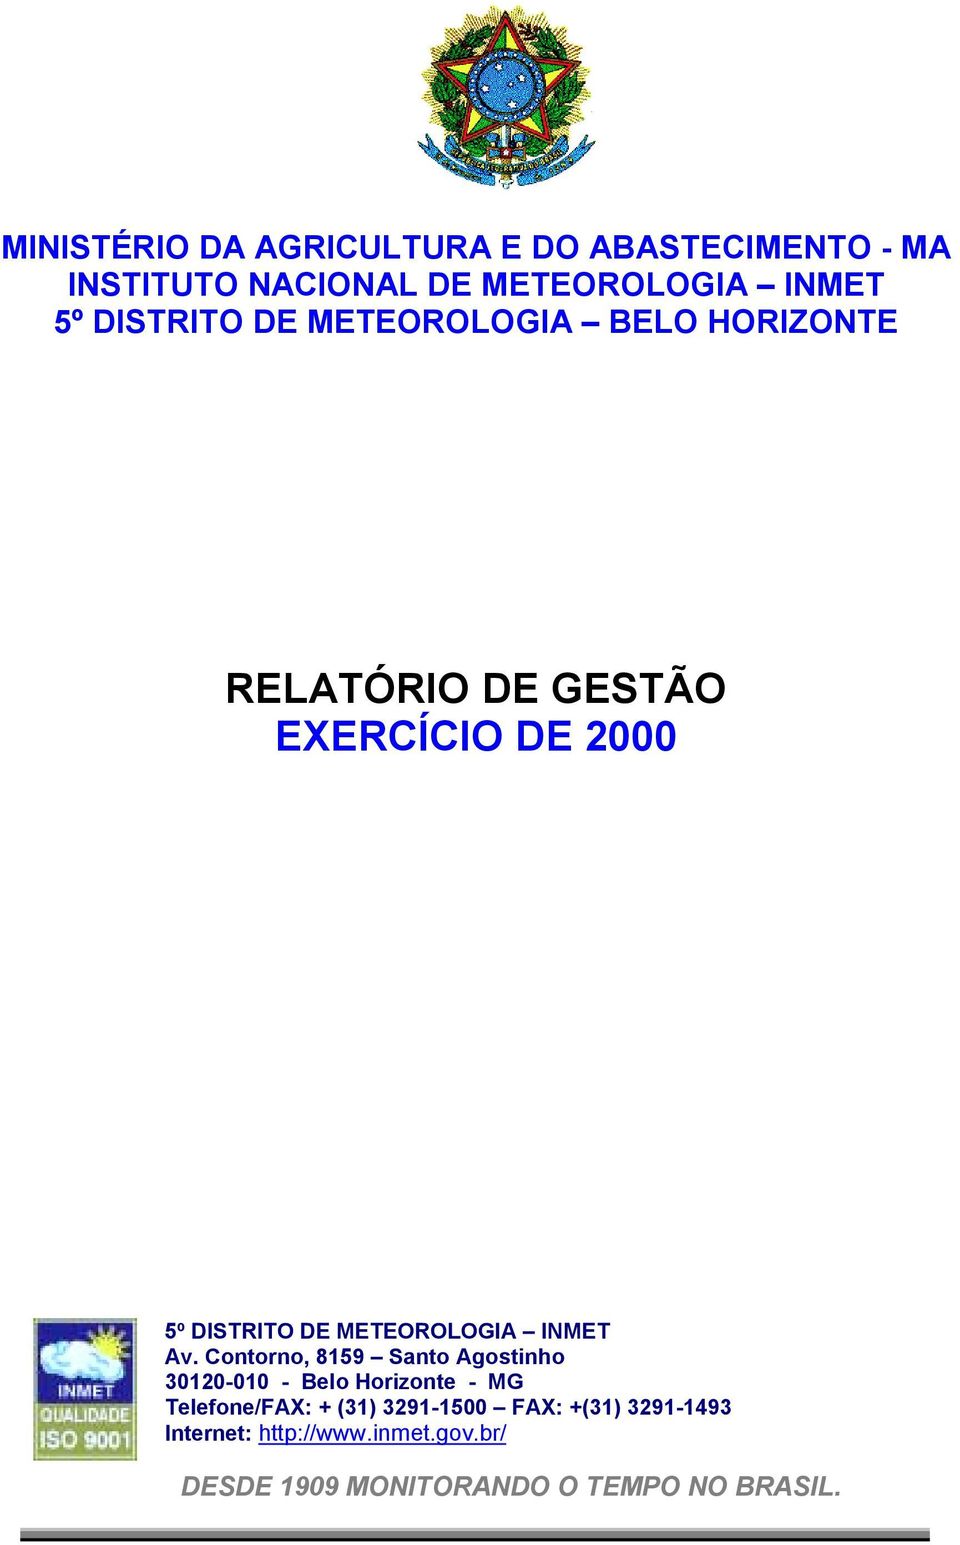 Belo Horizonte - MG Telefone/FAX: + (31) 3291-1500 FAX: +(31)